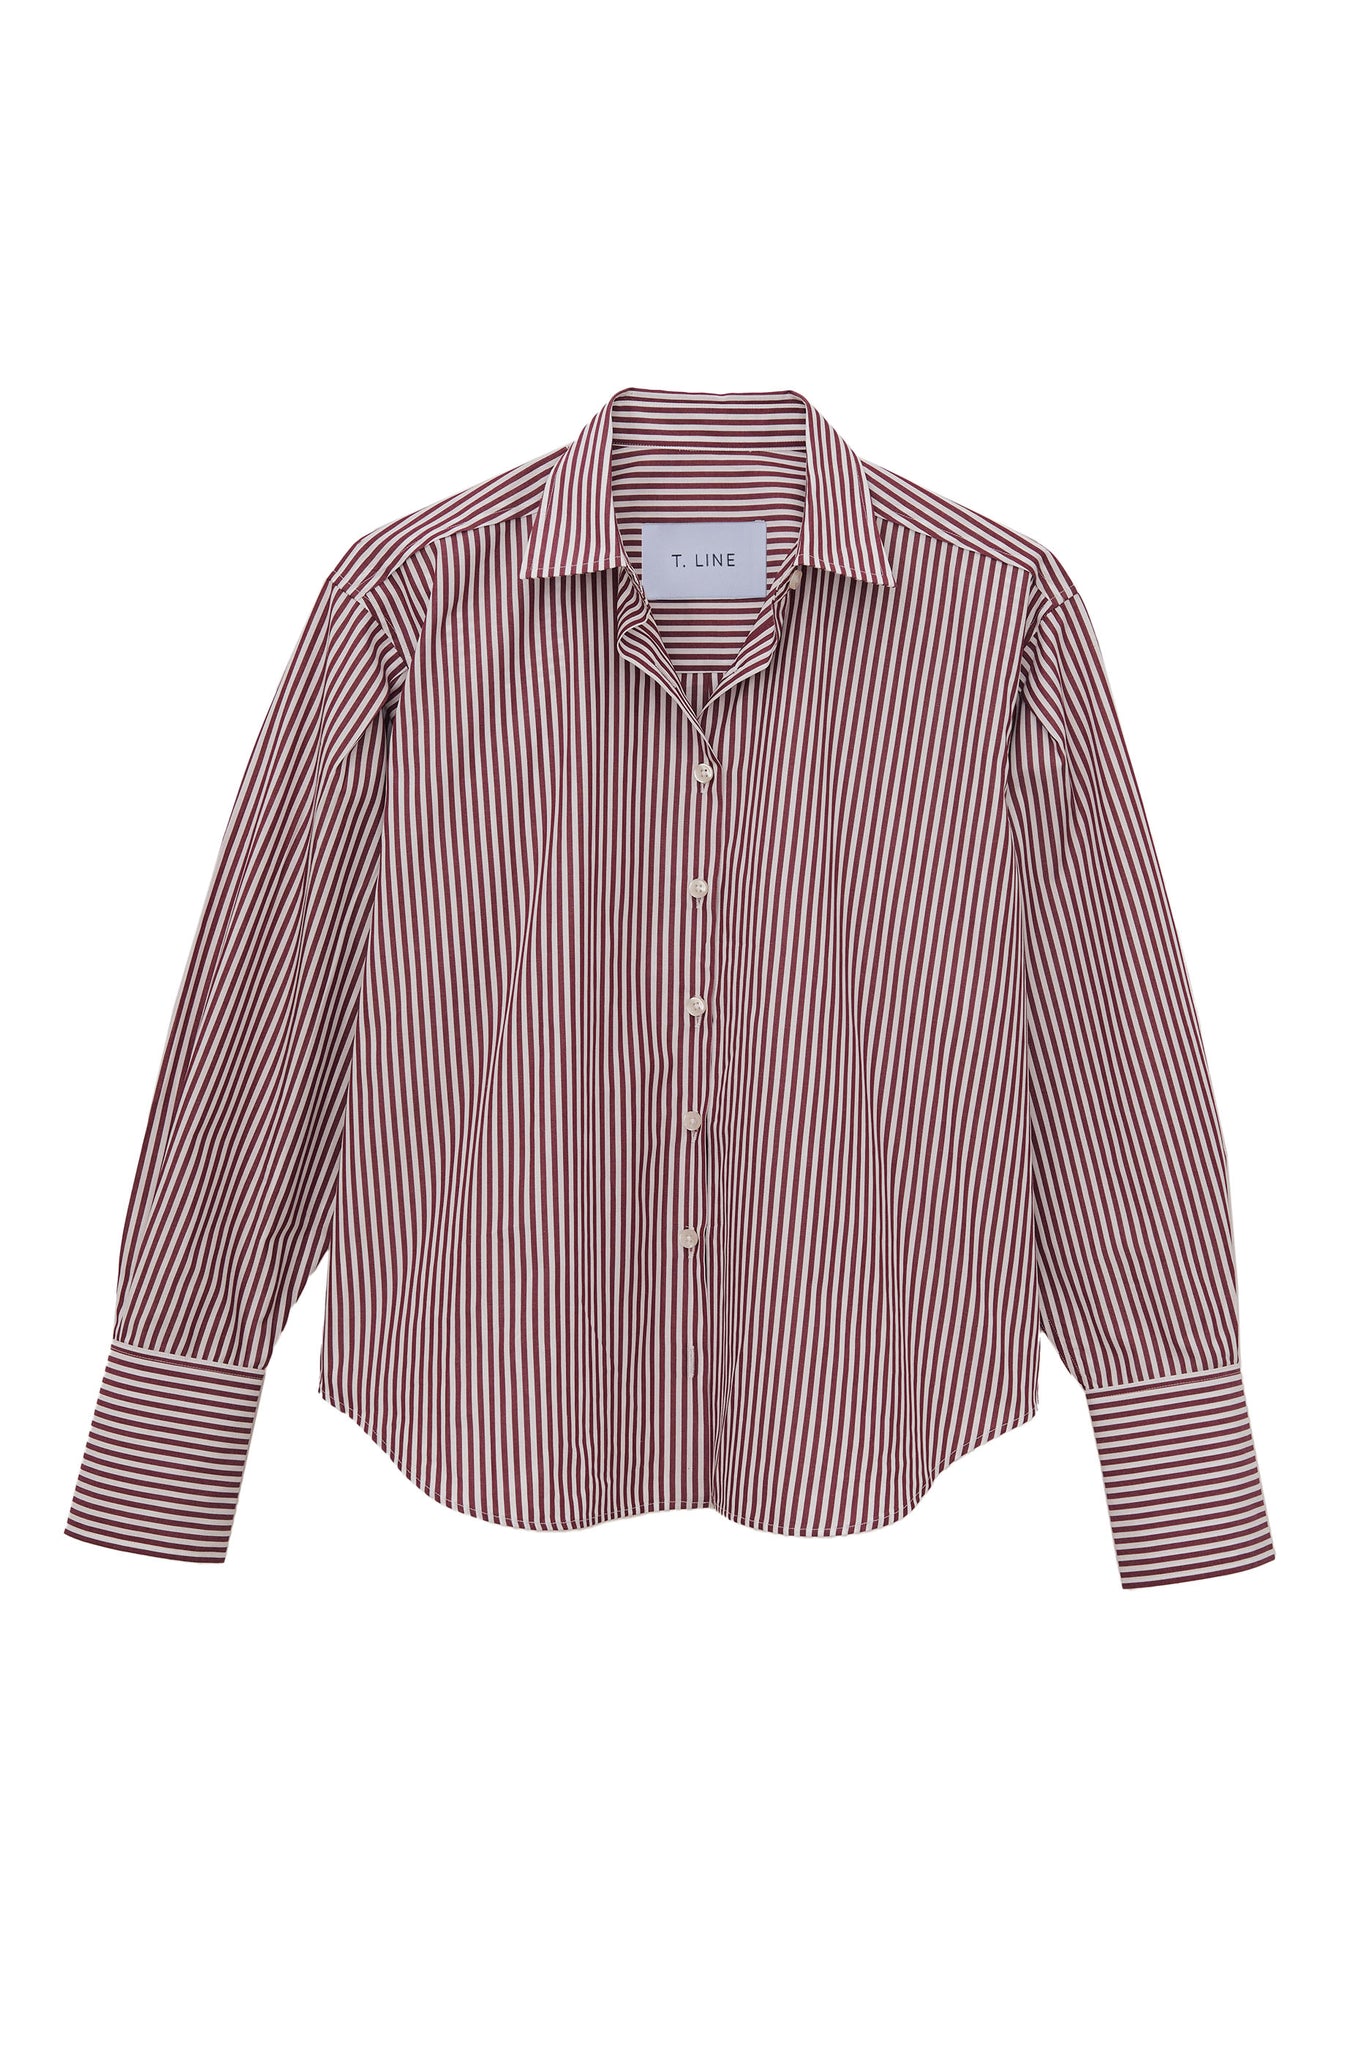 Isabel Shirt - Merlot Stripe